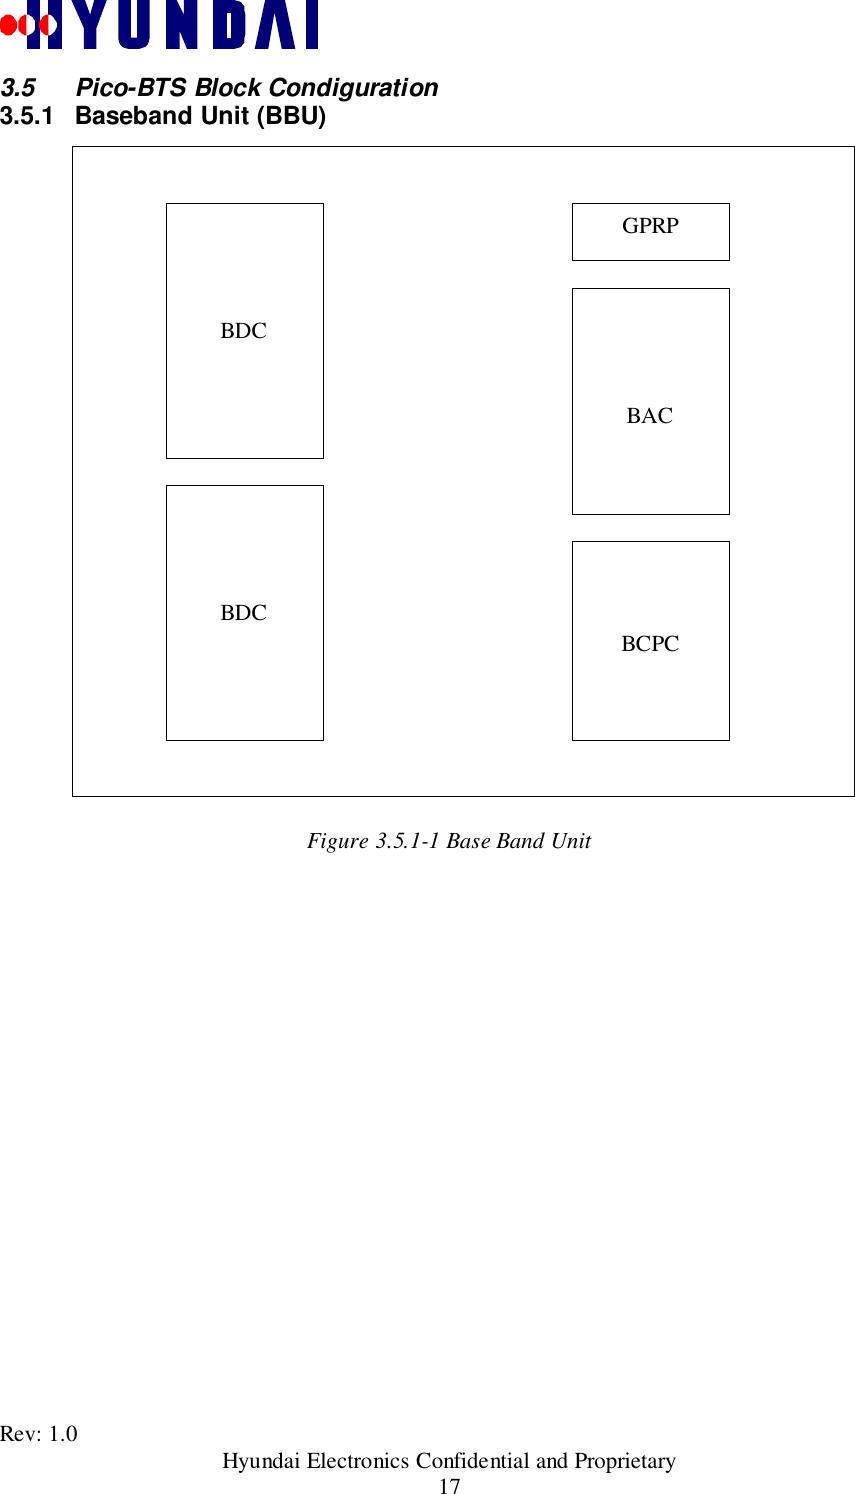 Rev: 1.0                                           Hyundai Electronics Confidential and Proprietary173.5 Pico-BTS Block Condiguration3.5.1  Baseband Unit (BBU)Figure 3.5.1-1 Base Band UnitBDCBDCGPRPBACBCPC